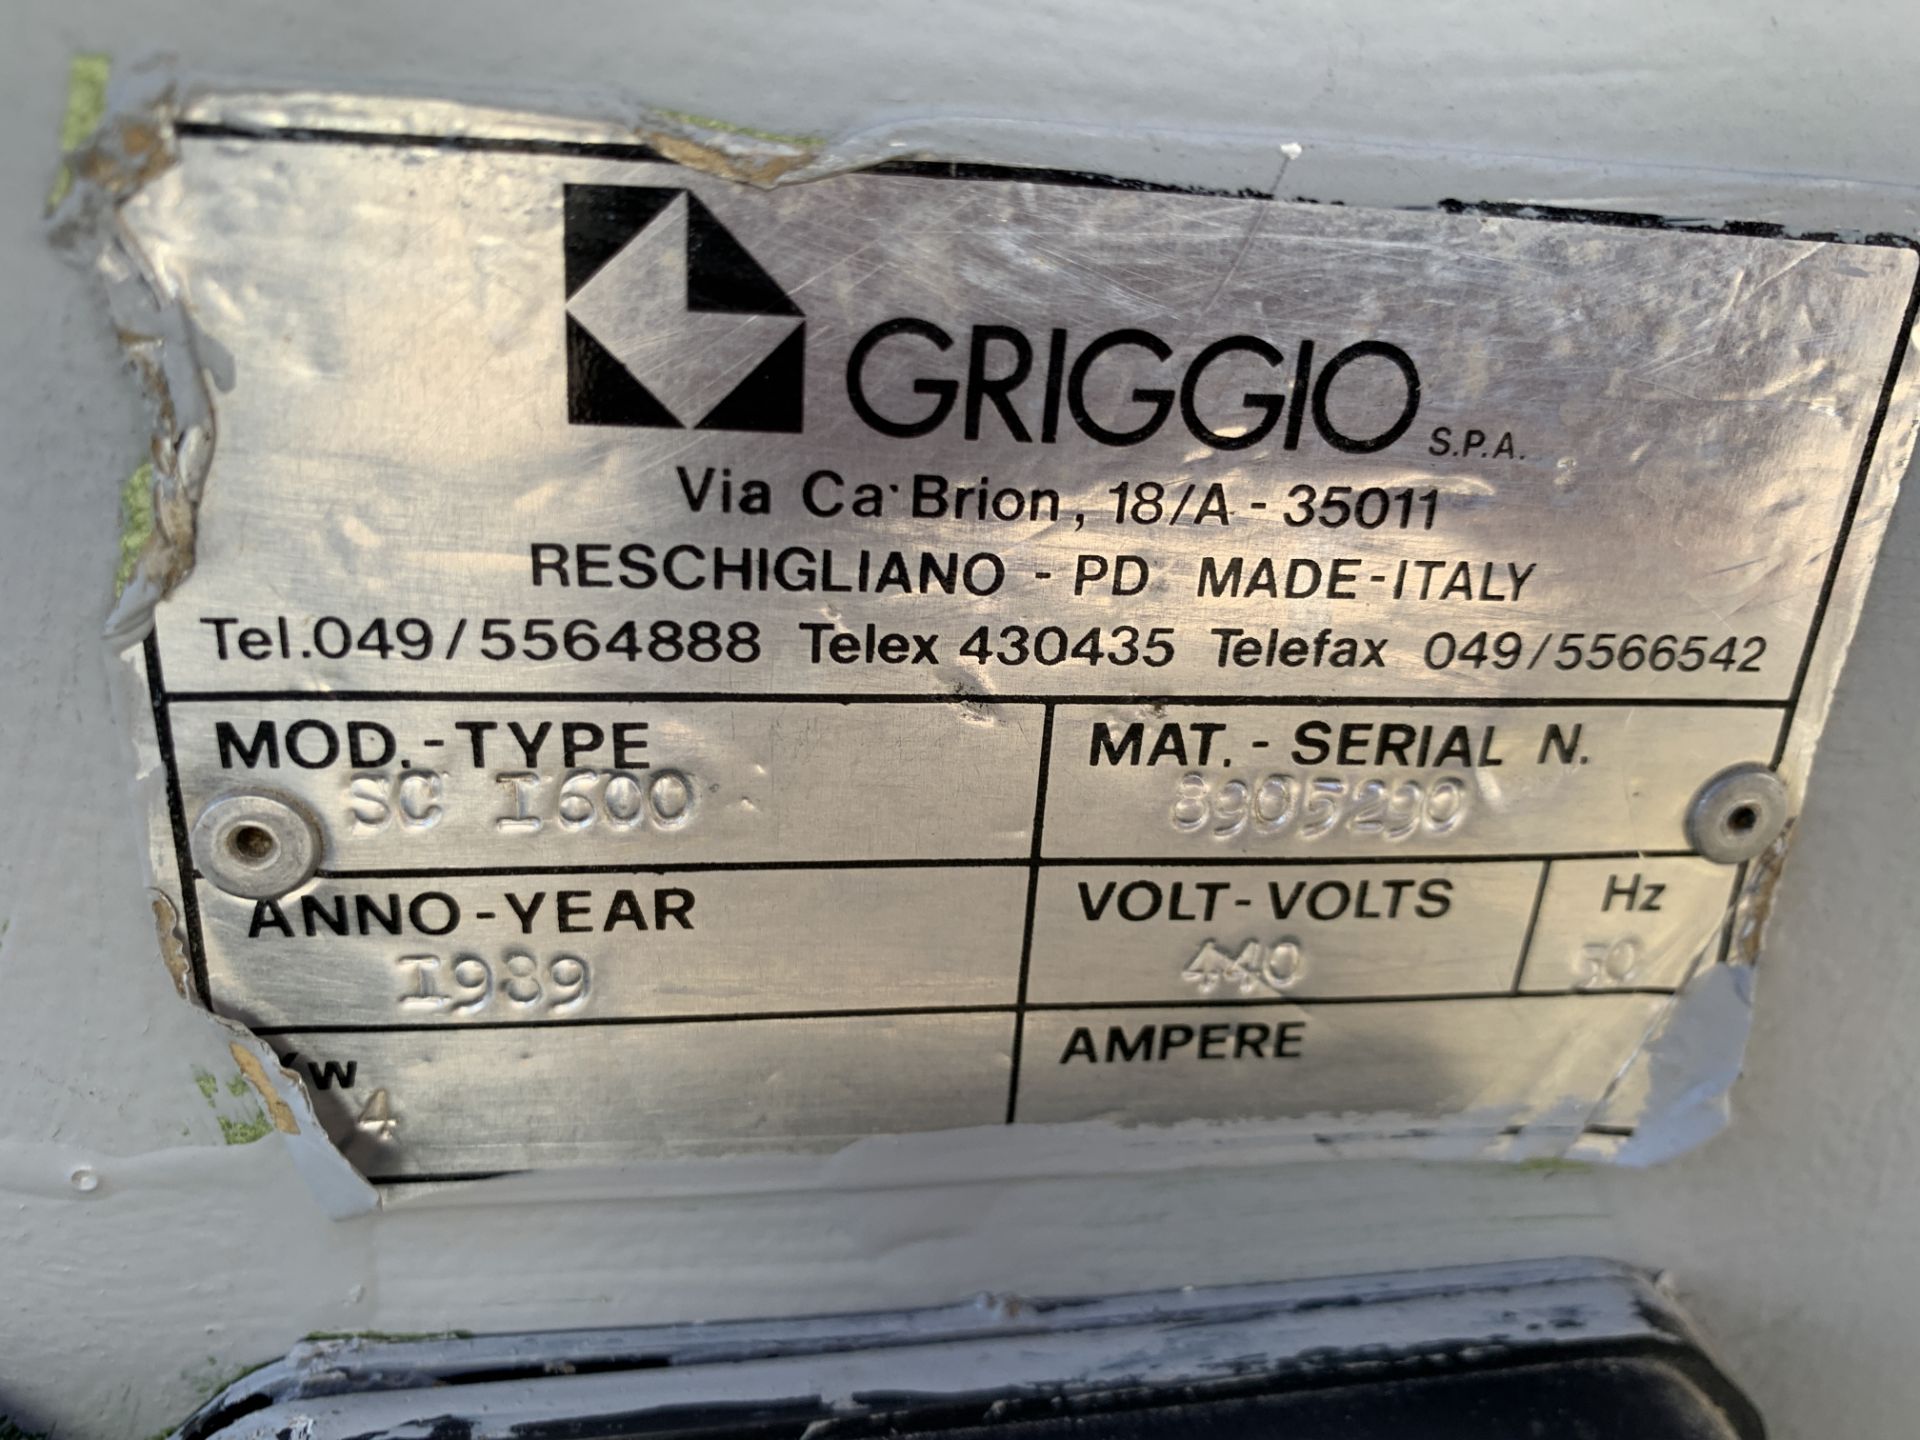 Griggio SC1600 Sliding Table Tilting Panel Saw - 3ph. - Image 6 of 6